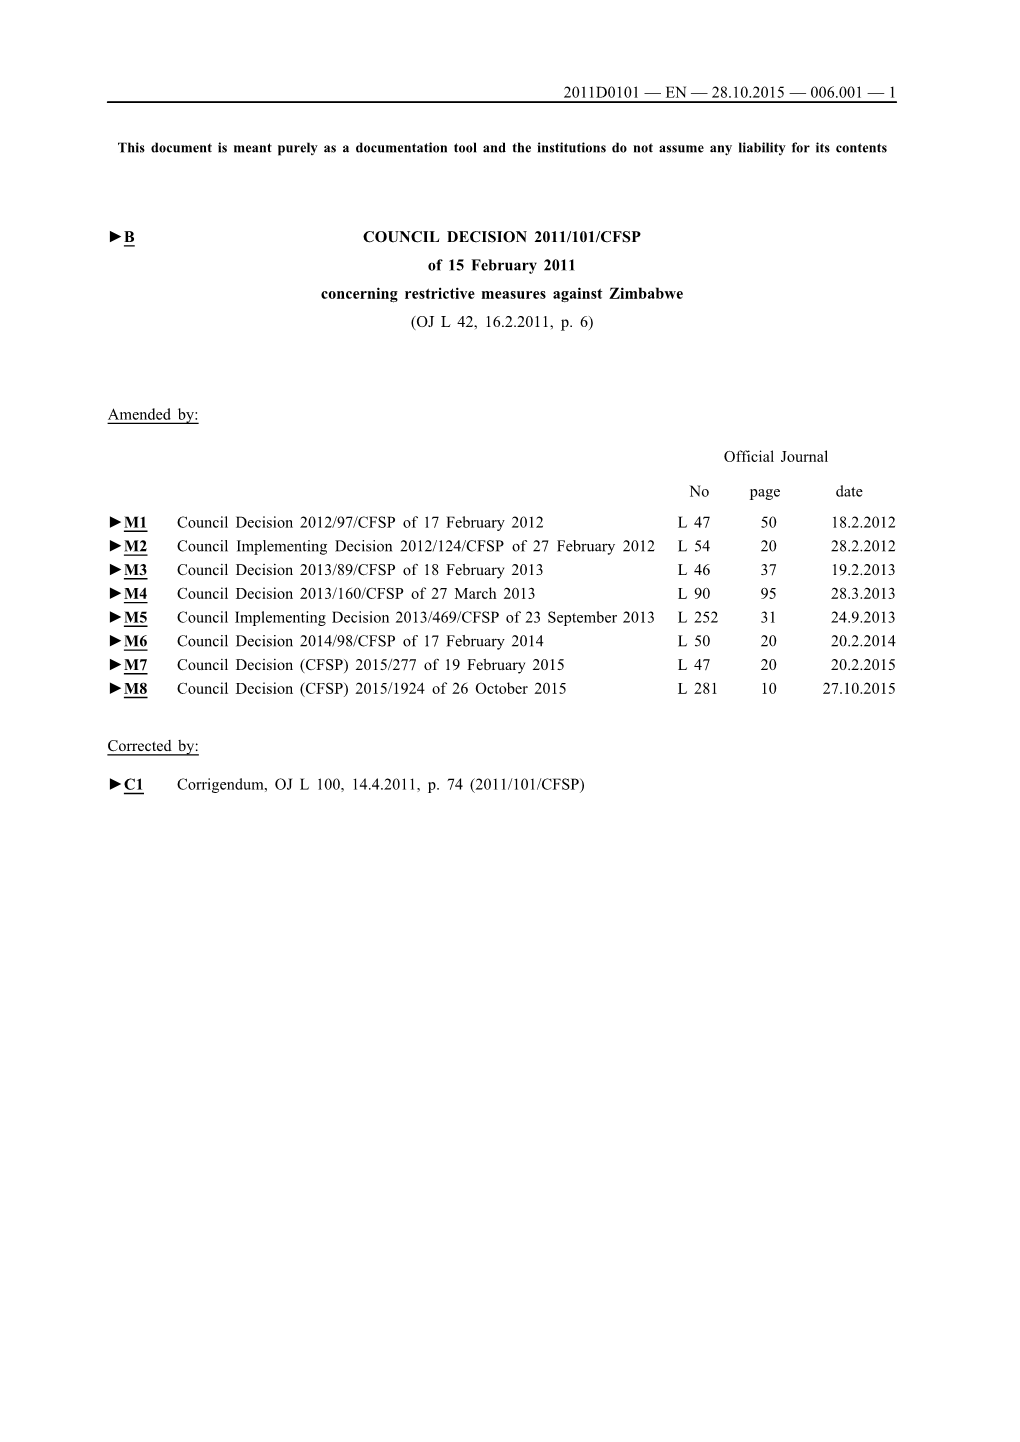 B COUNCIL DECISION 2011/101/CFSP of 15 February 2011 Concerning Restrictive Measures Against Zimbabwe (OJ L 42, 16.2.2011, P